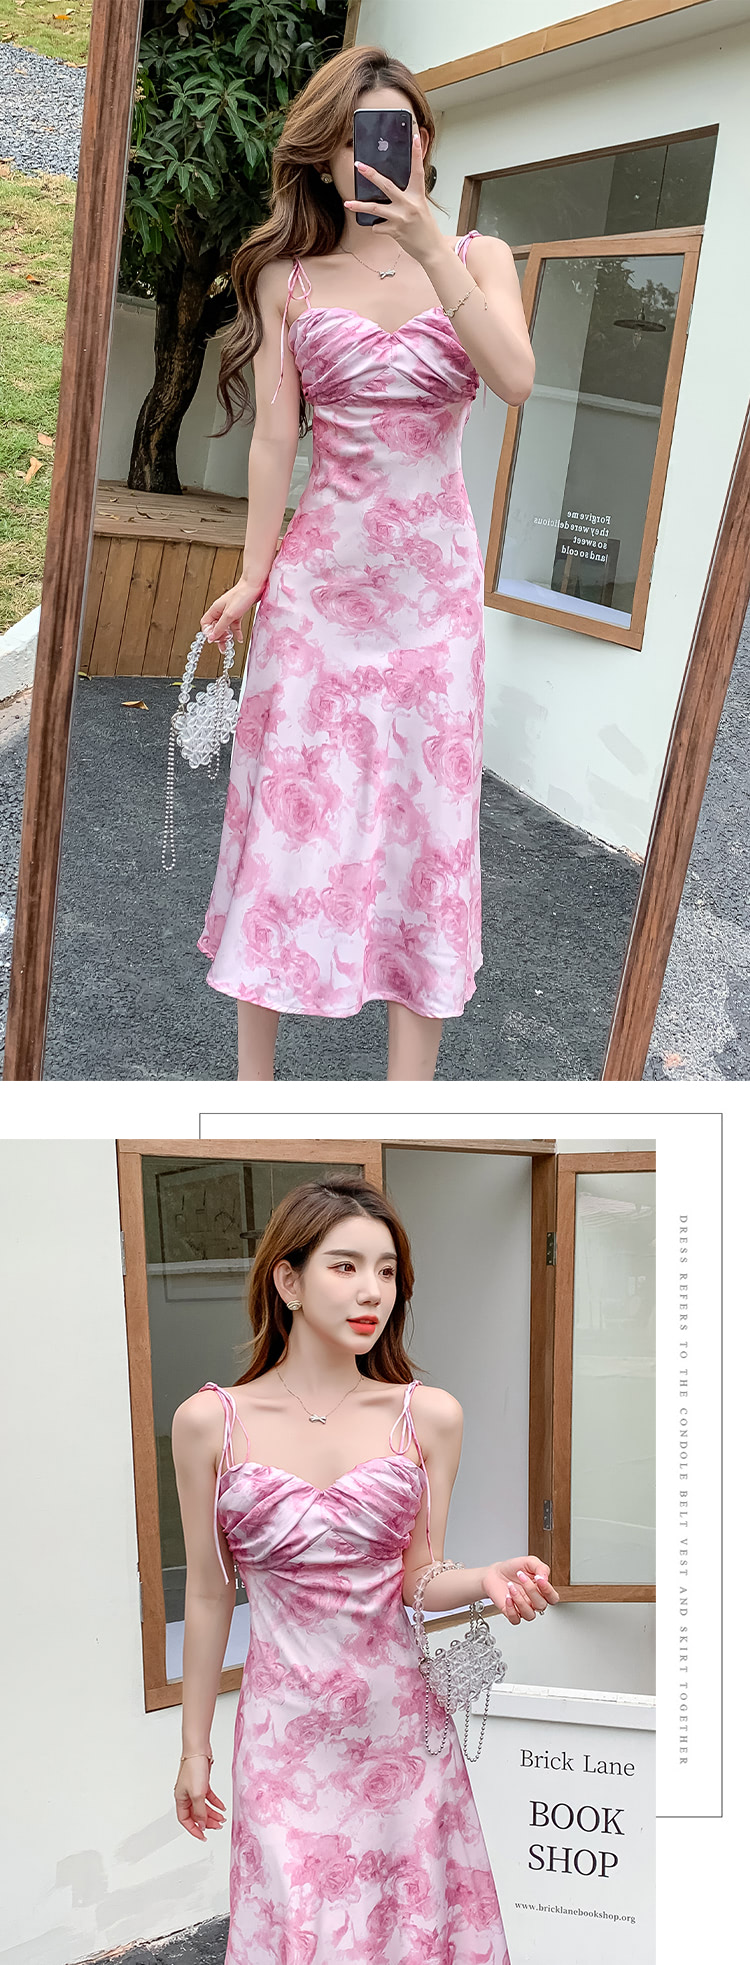 Sweet-Floral-Printed-Satin-Summer-Casual-Slip-Dress-Beach-Wear18